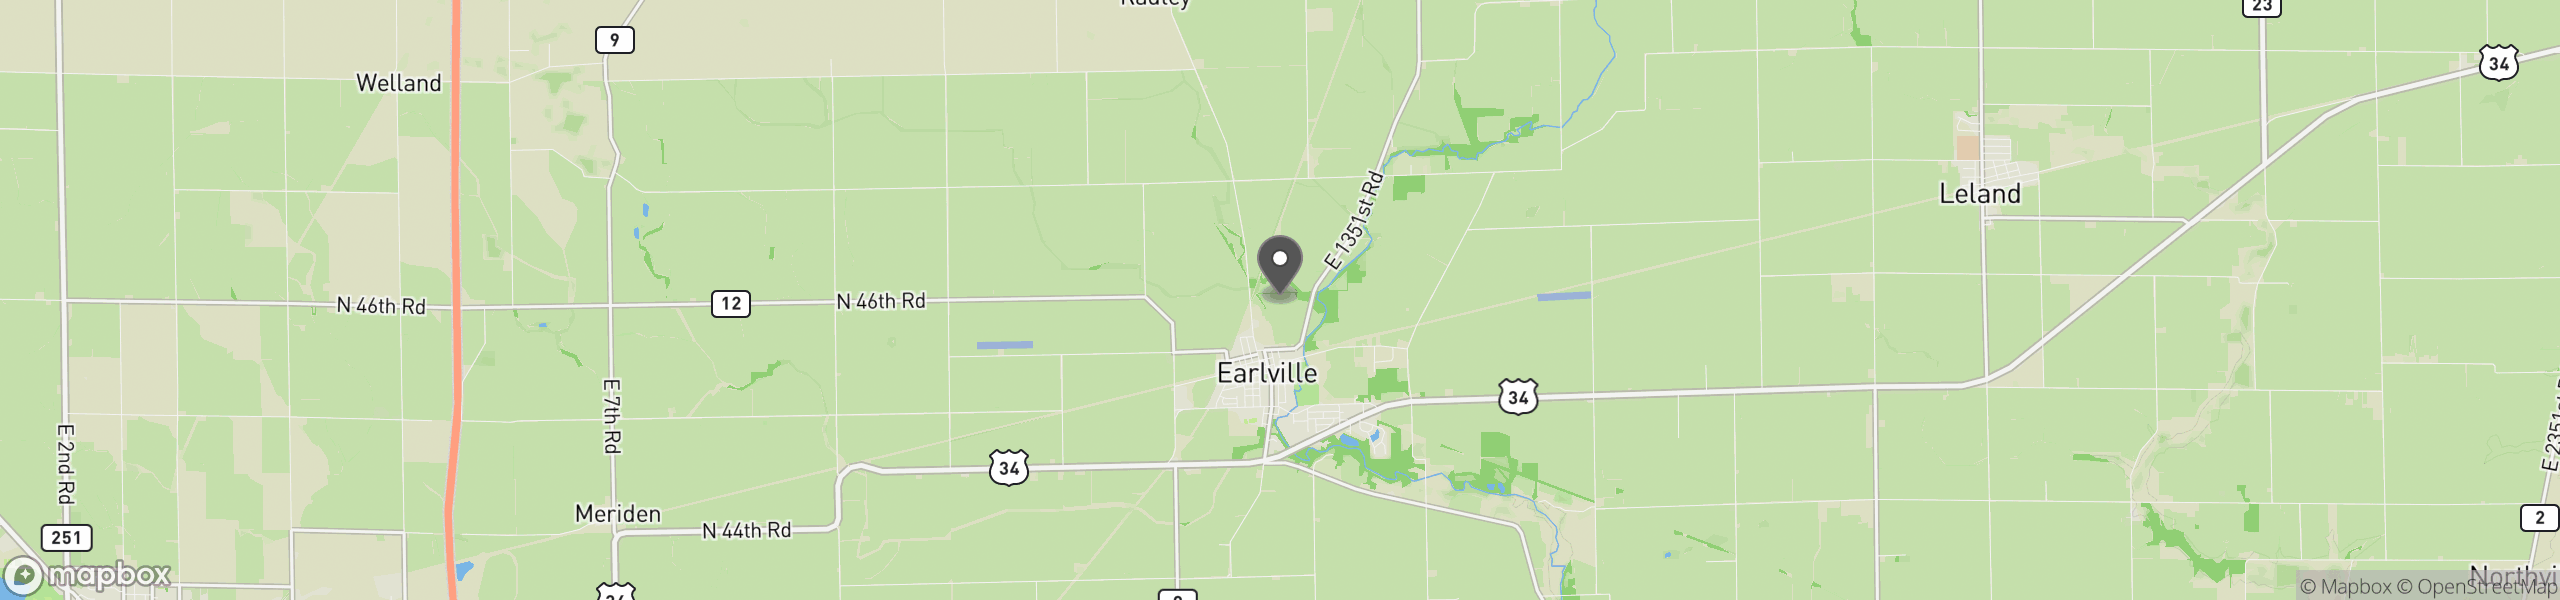 Earlville, IL 60518